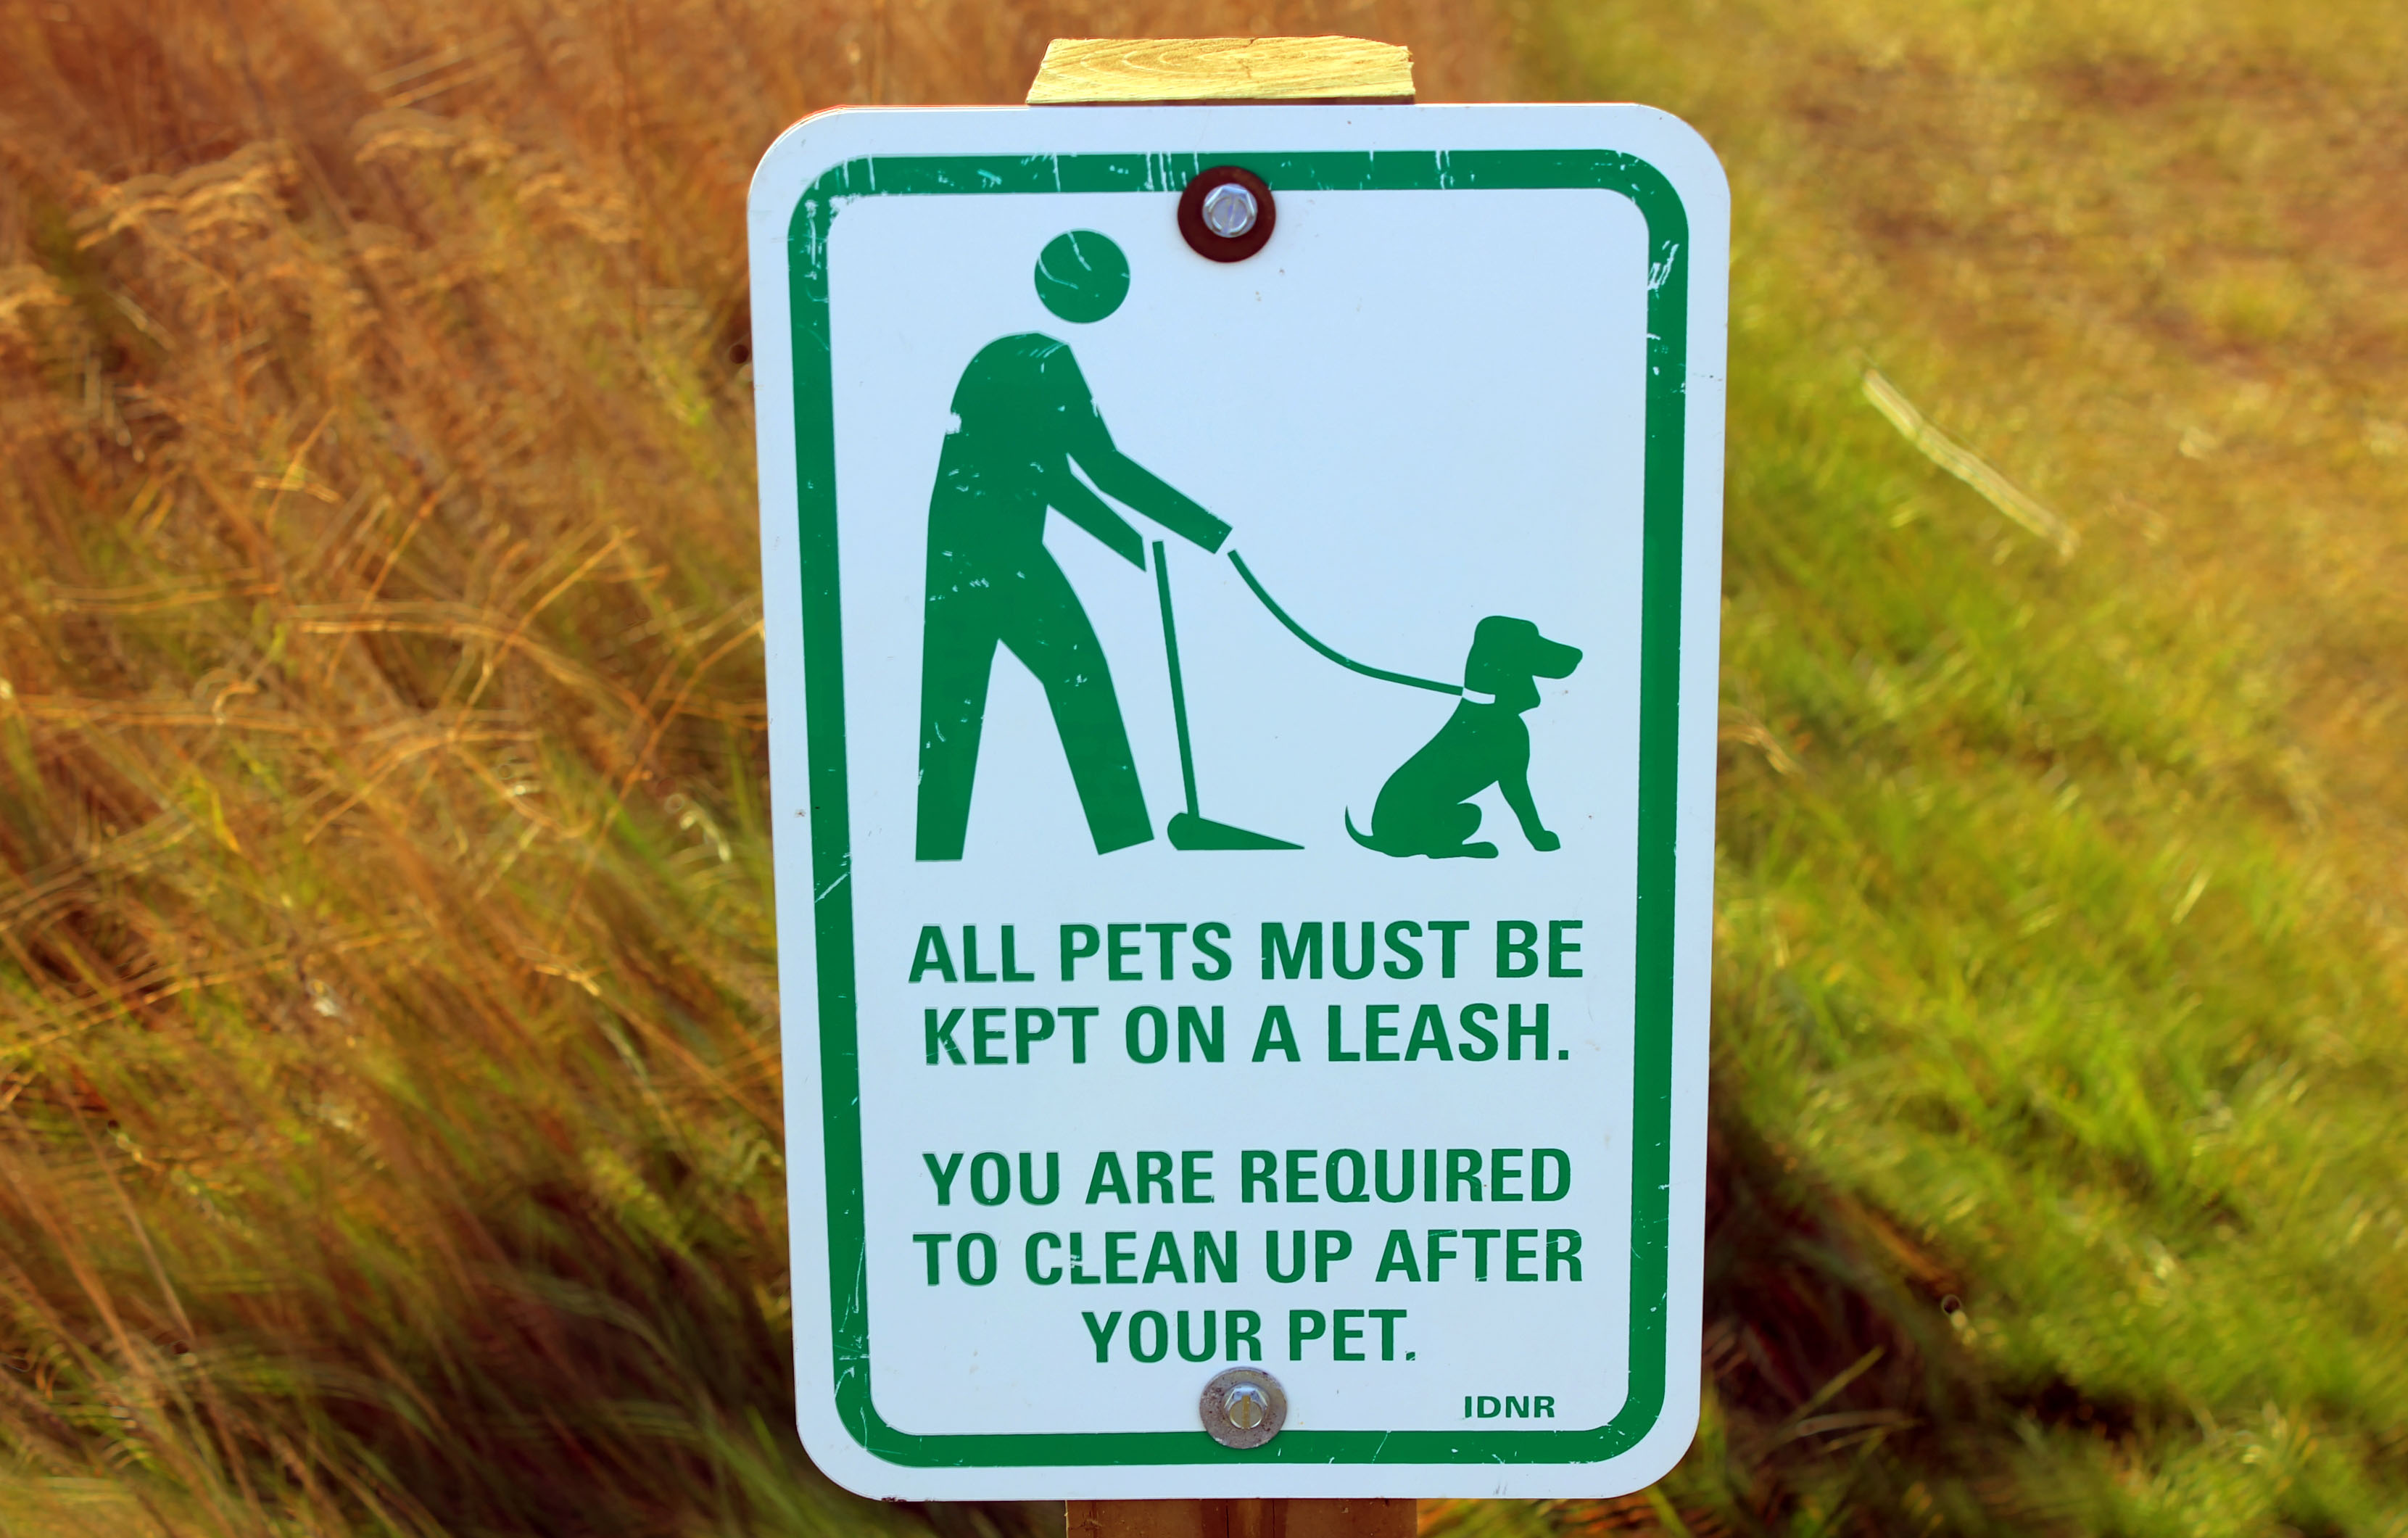 Pet Sign image - Free stock photo - Public Domain photo - CC0 Images